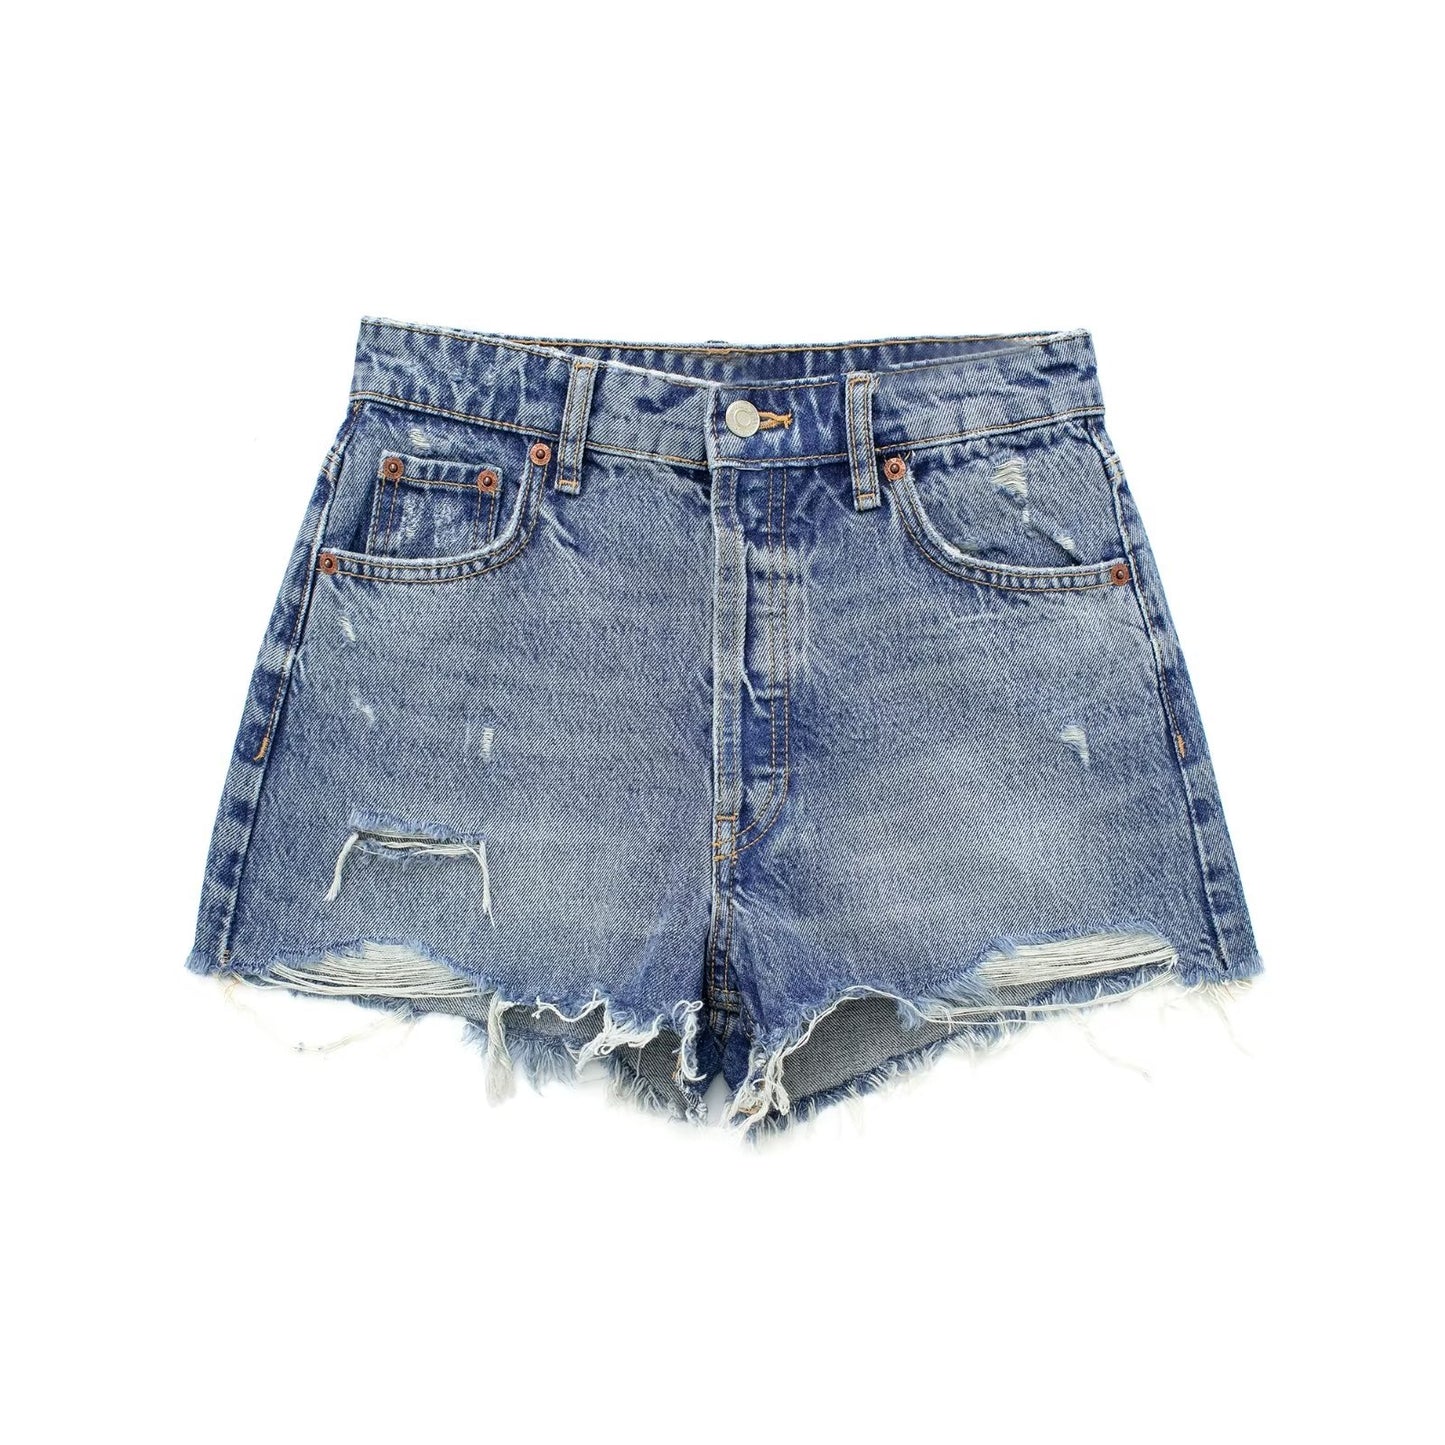 Summer Women  Clothing Perforated Hole Decoration High Waist Denim Shorts